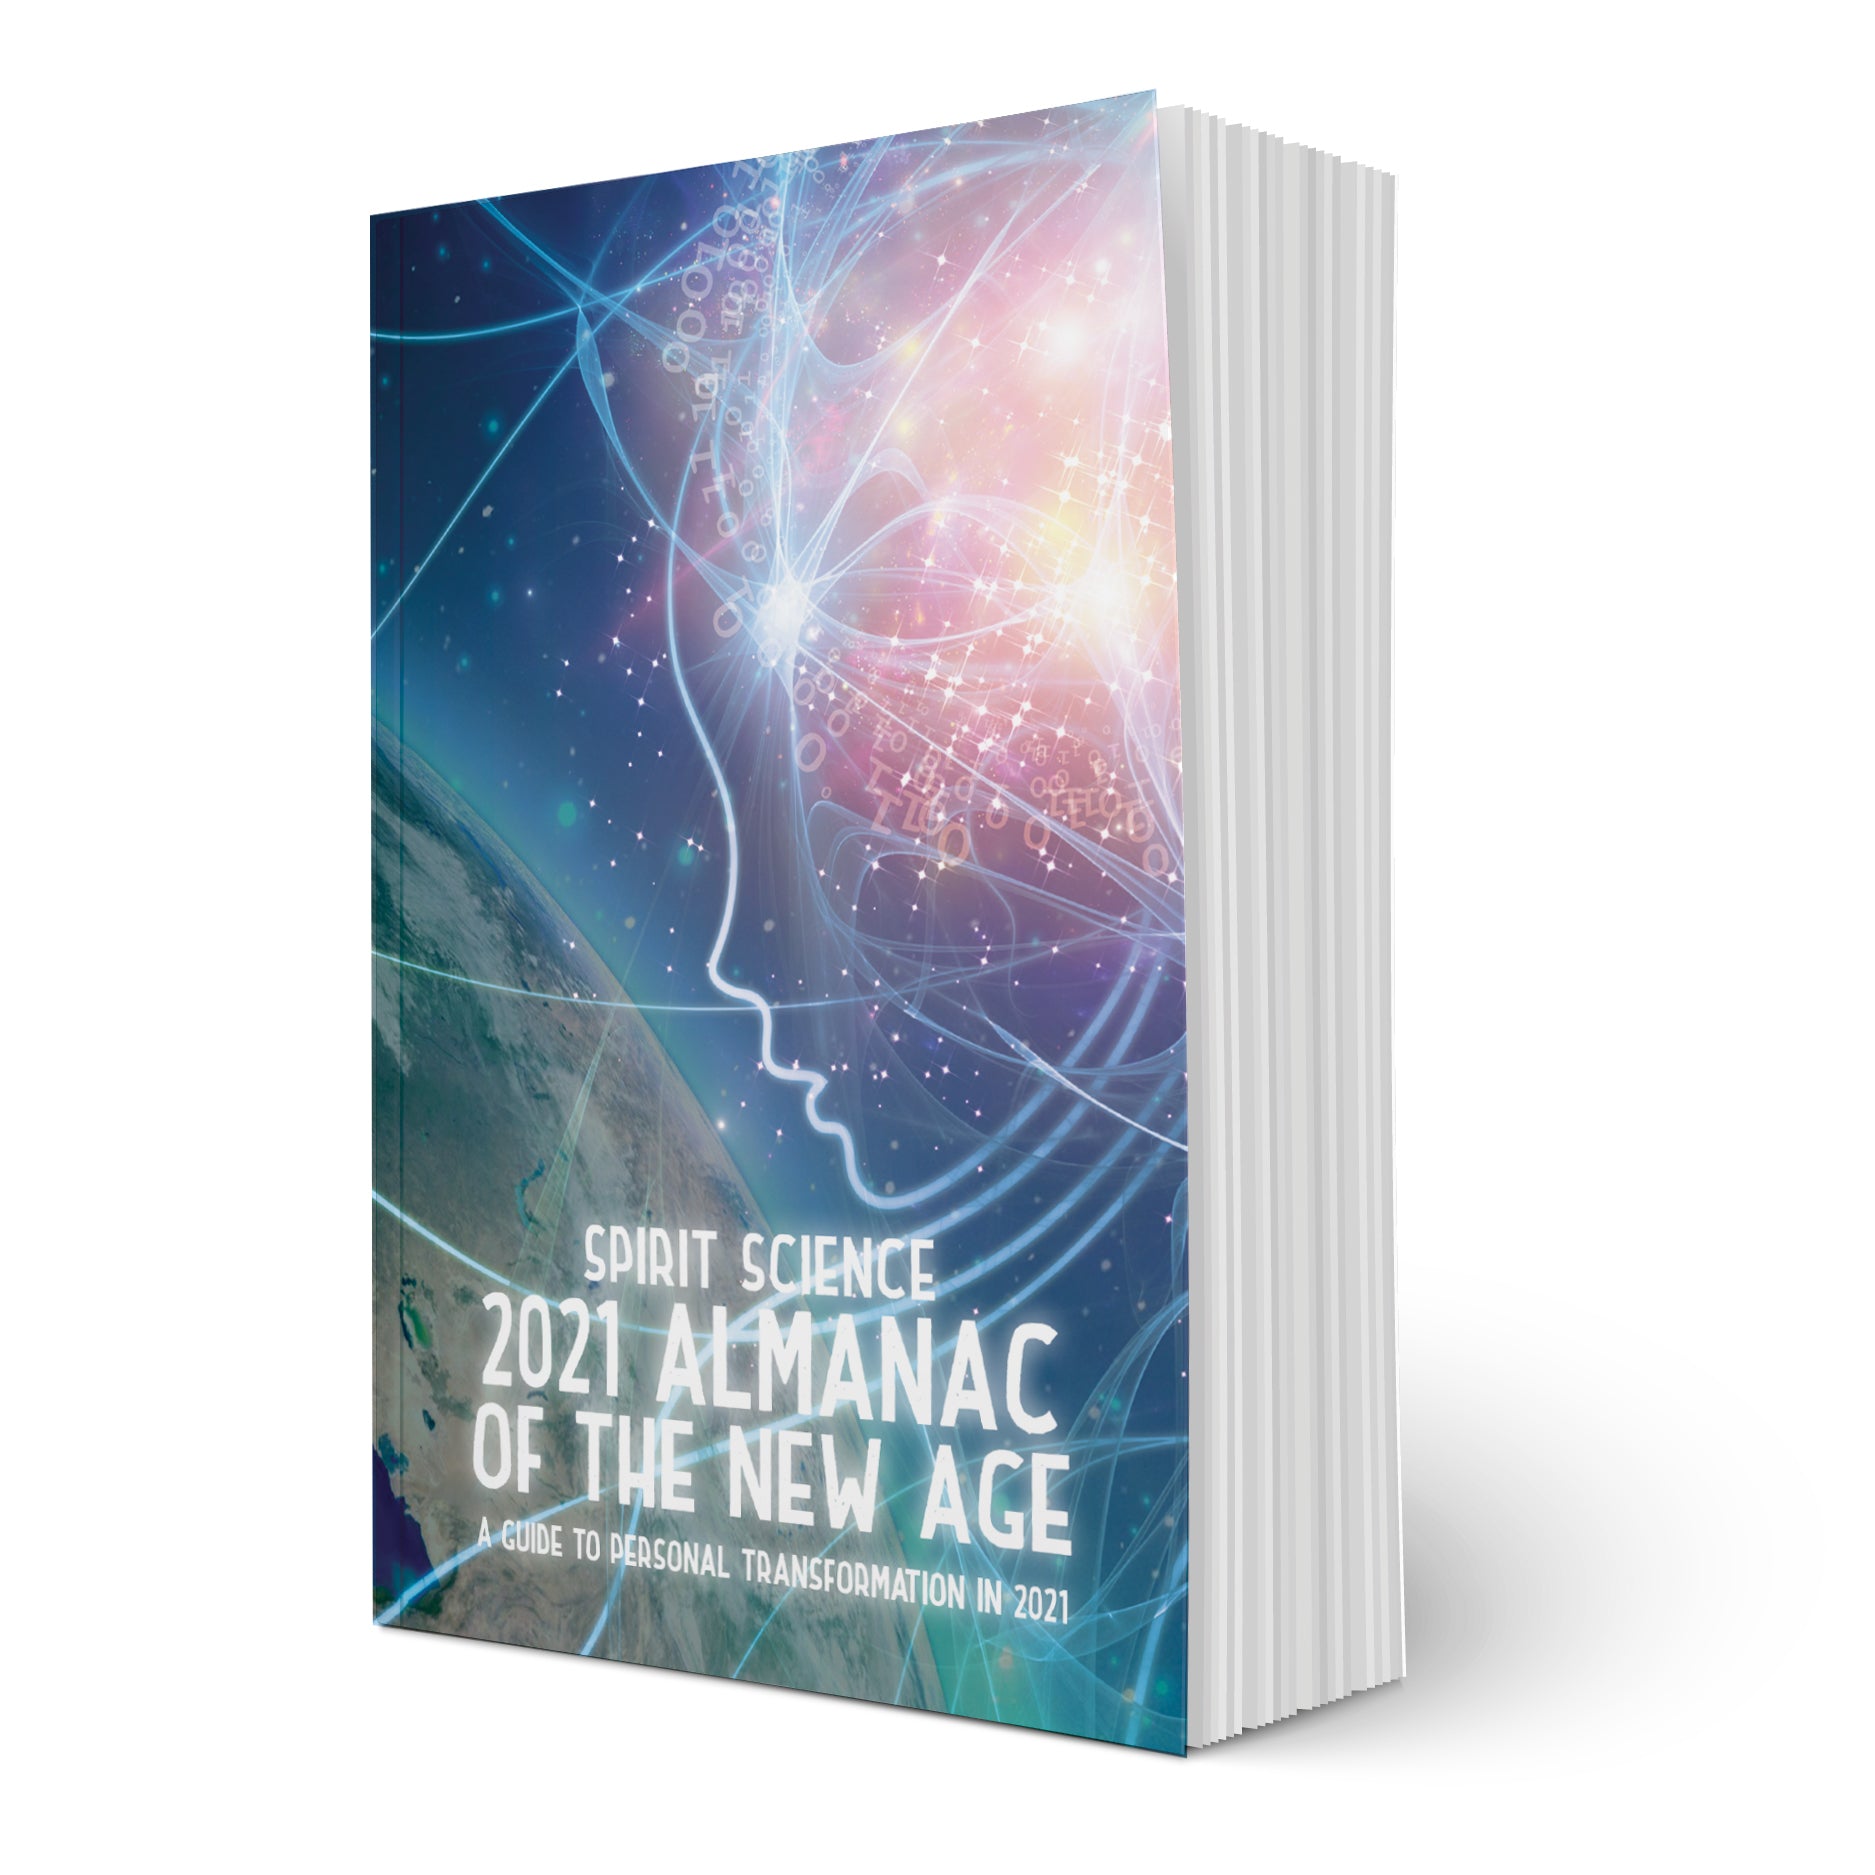 Spirit Science 2021 Almanac of the New Age